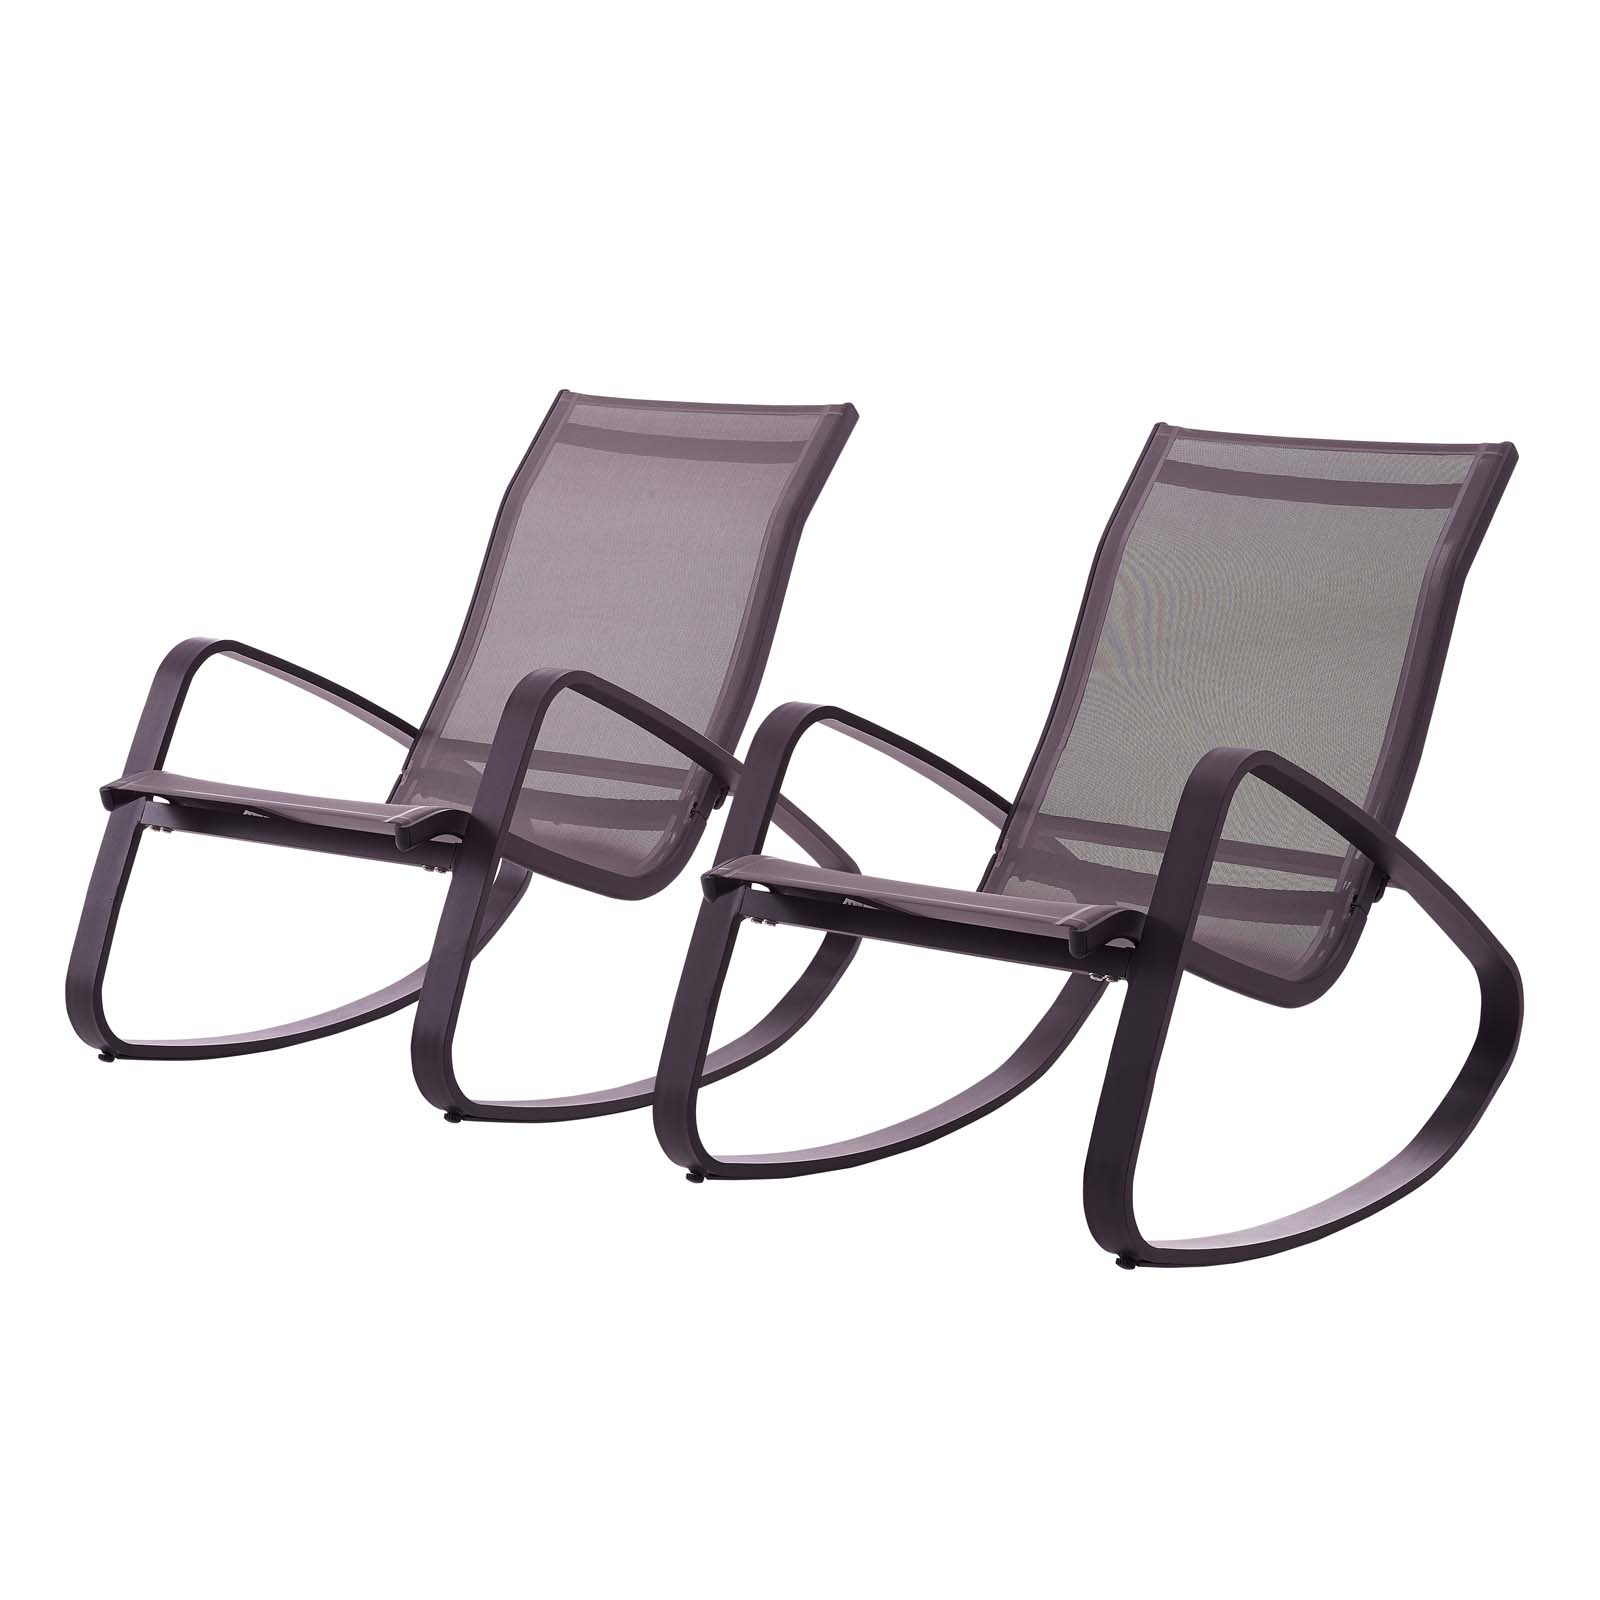 Modern Contemporary Urban Design Outdoor Patio Balcony Garden Furniture Lounge Chair Set, Set of Two, Aluminum Metal Steel, Black - image 1 of 6